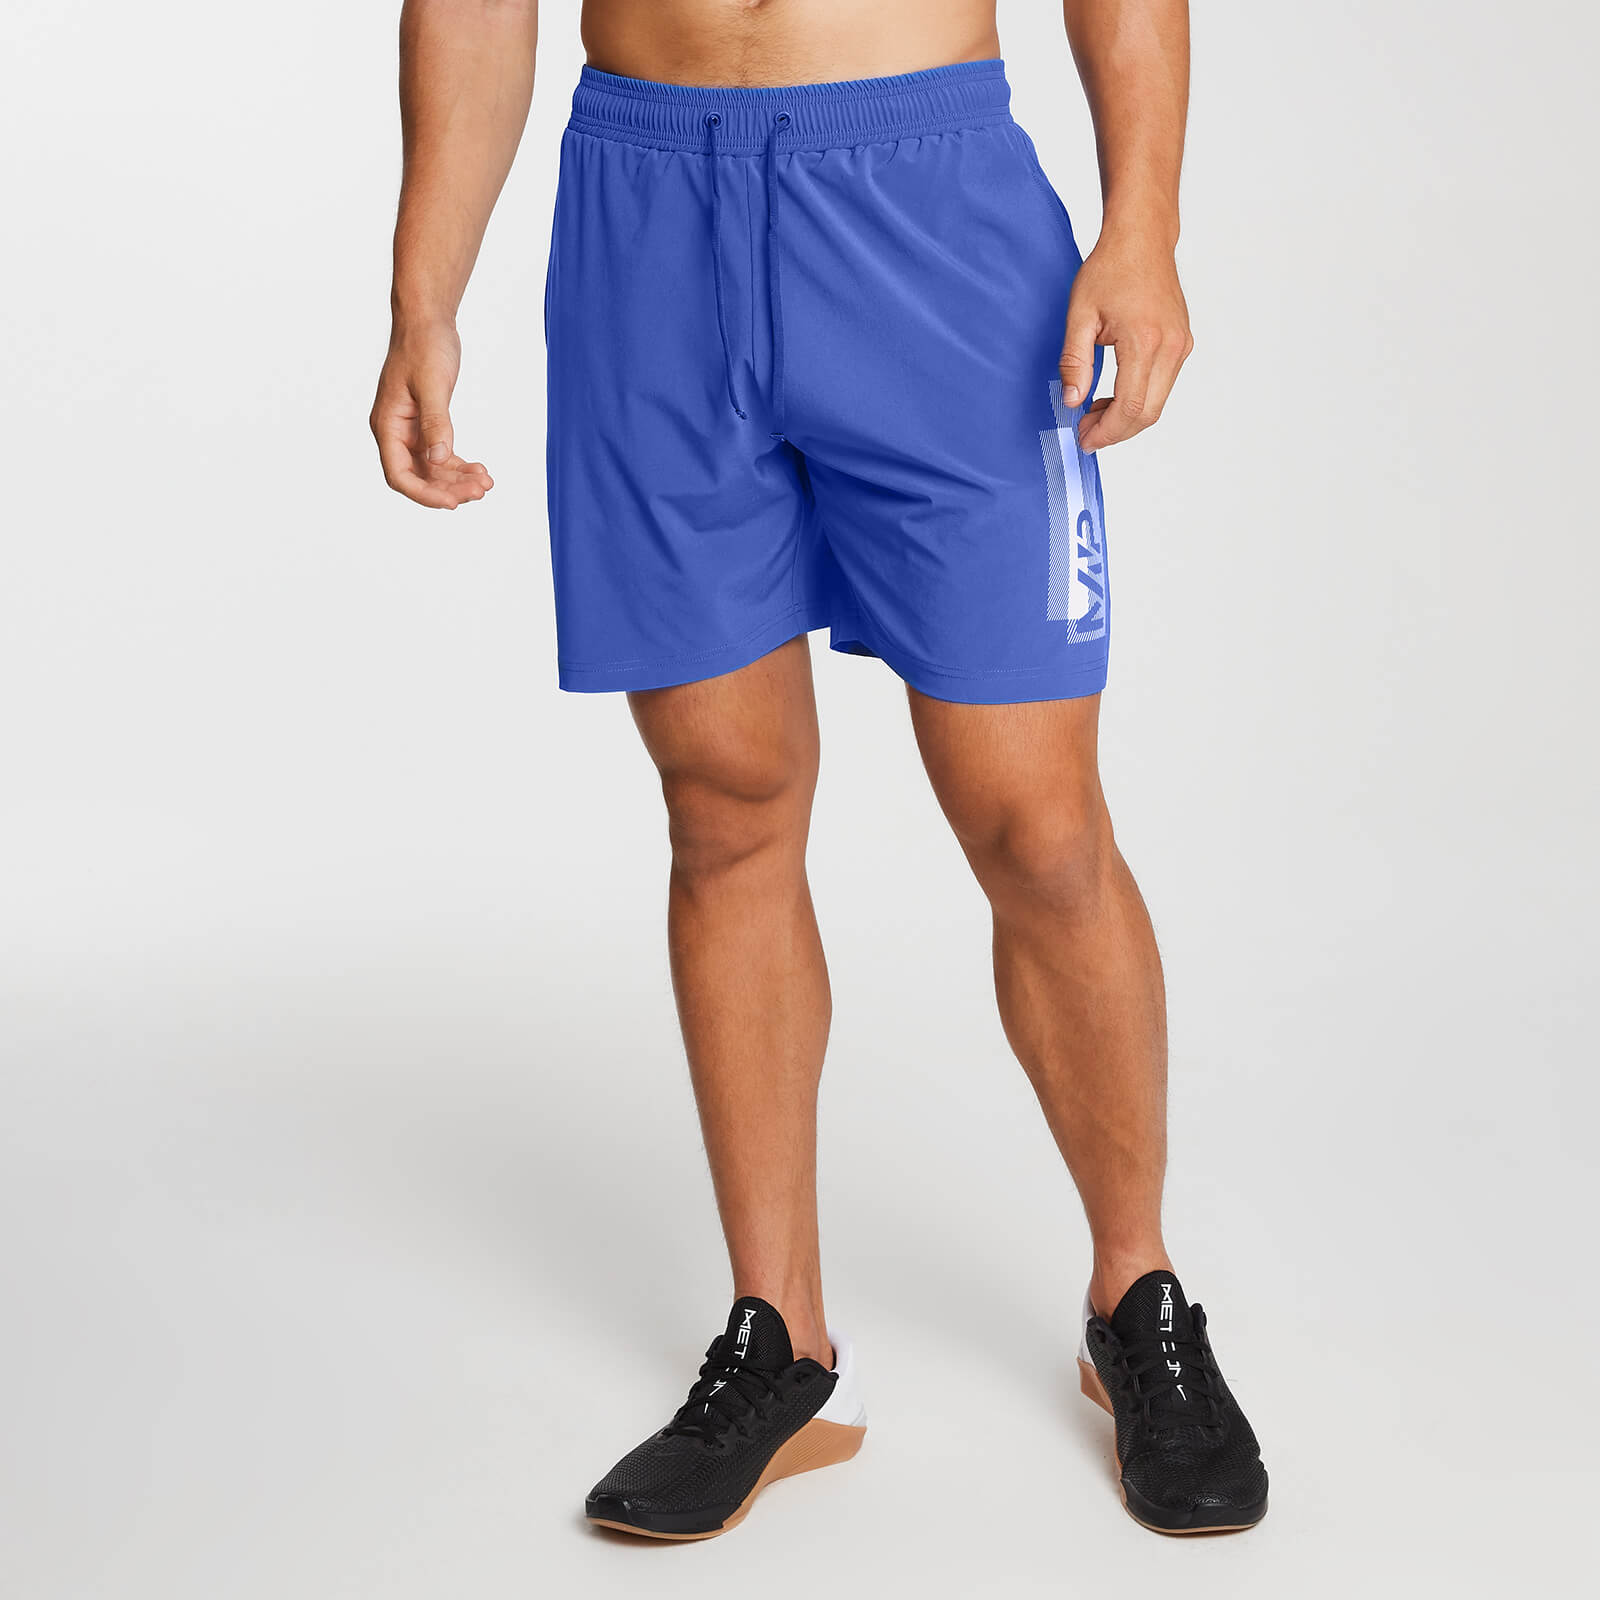 Men's Printed Training Shorts - Cobalt